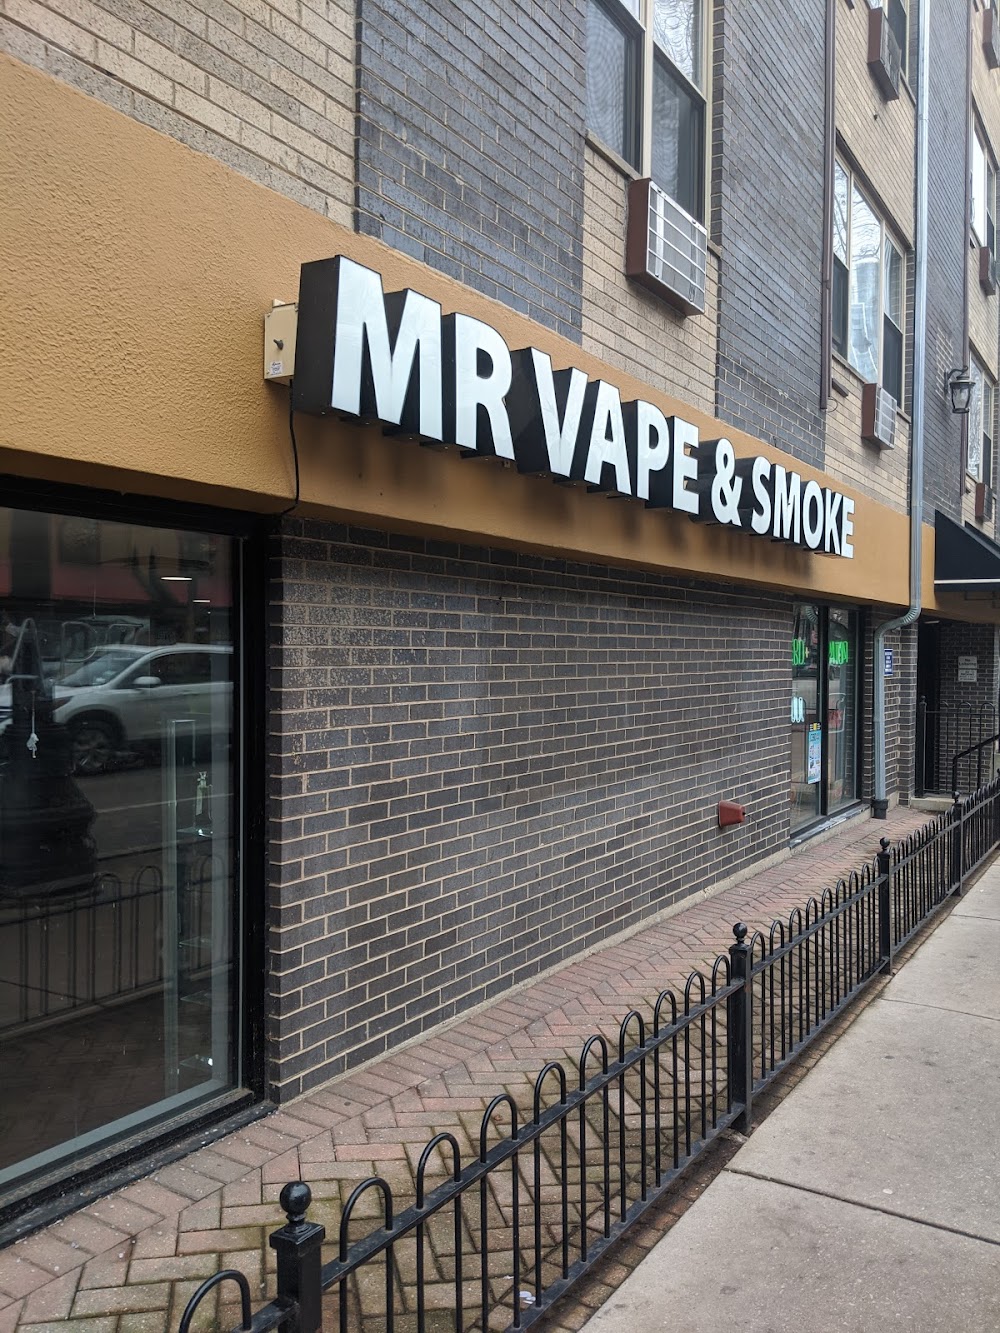 Mr vape and smoke